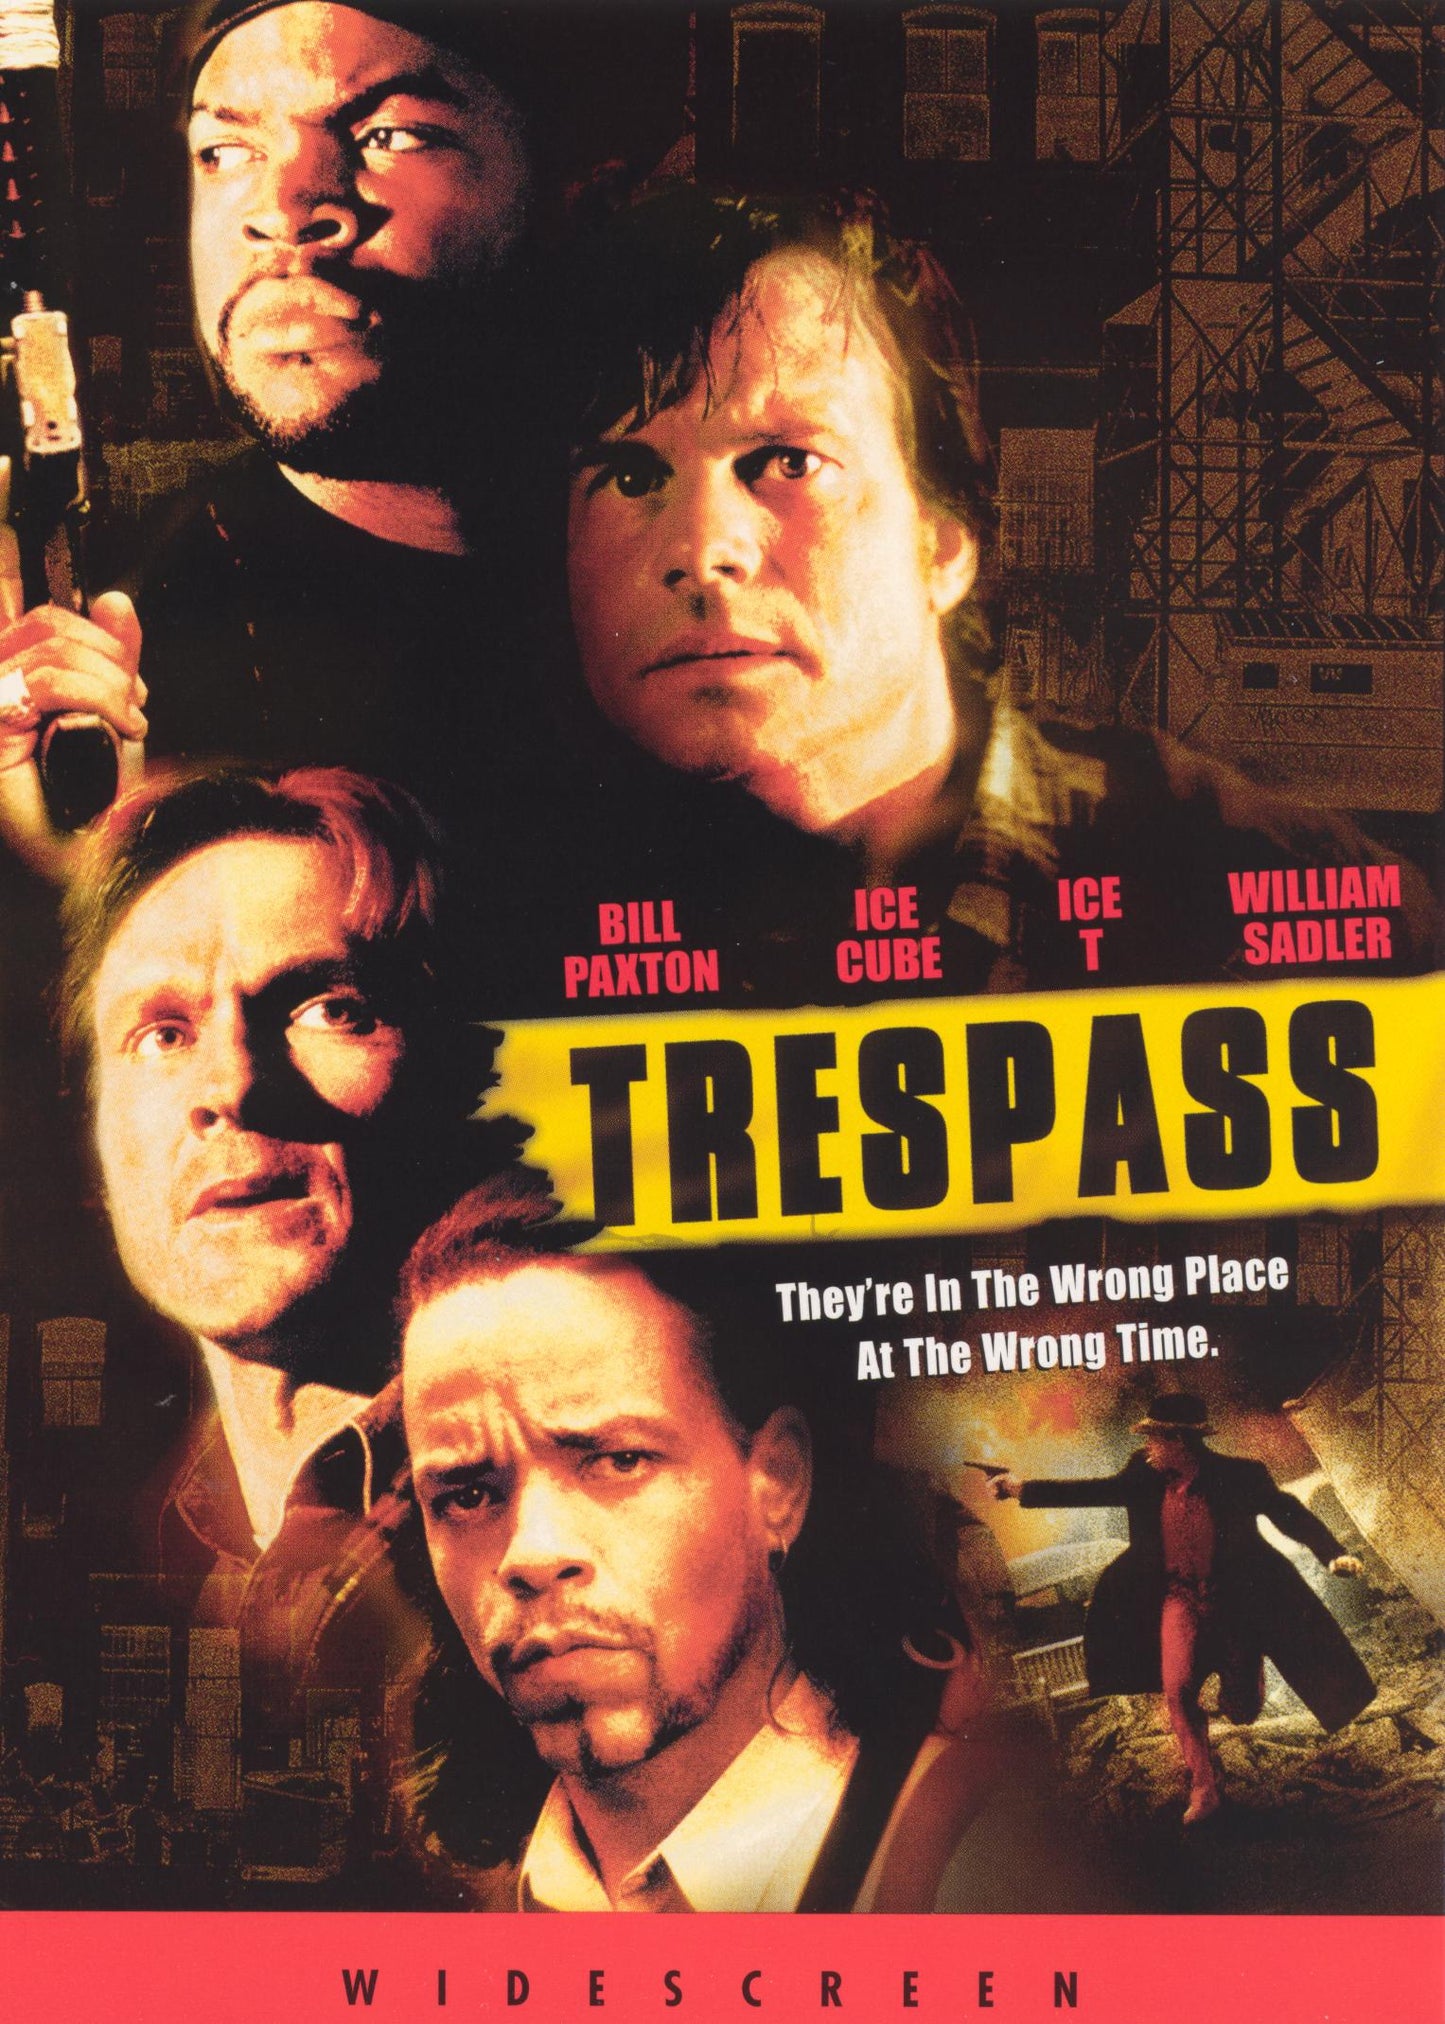 Trespass cover art